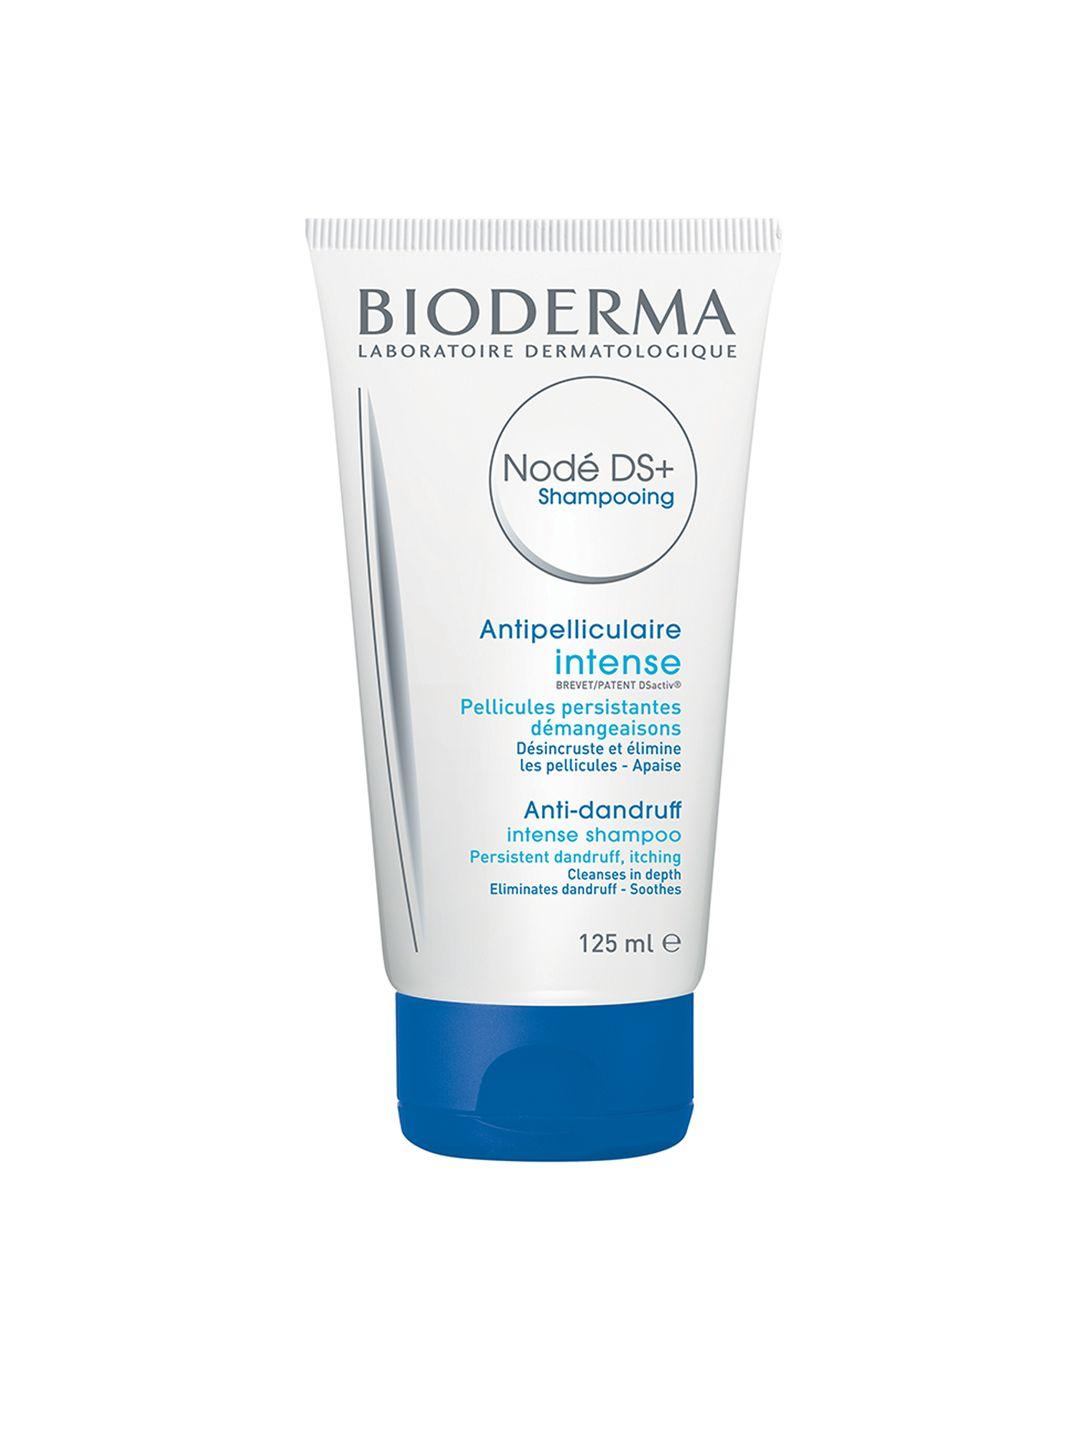 bioderma-node-ds+-anti-dandruff-shampoo-125-ml